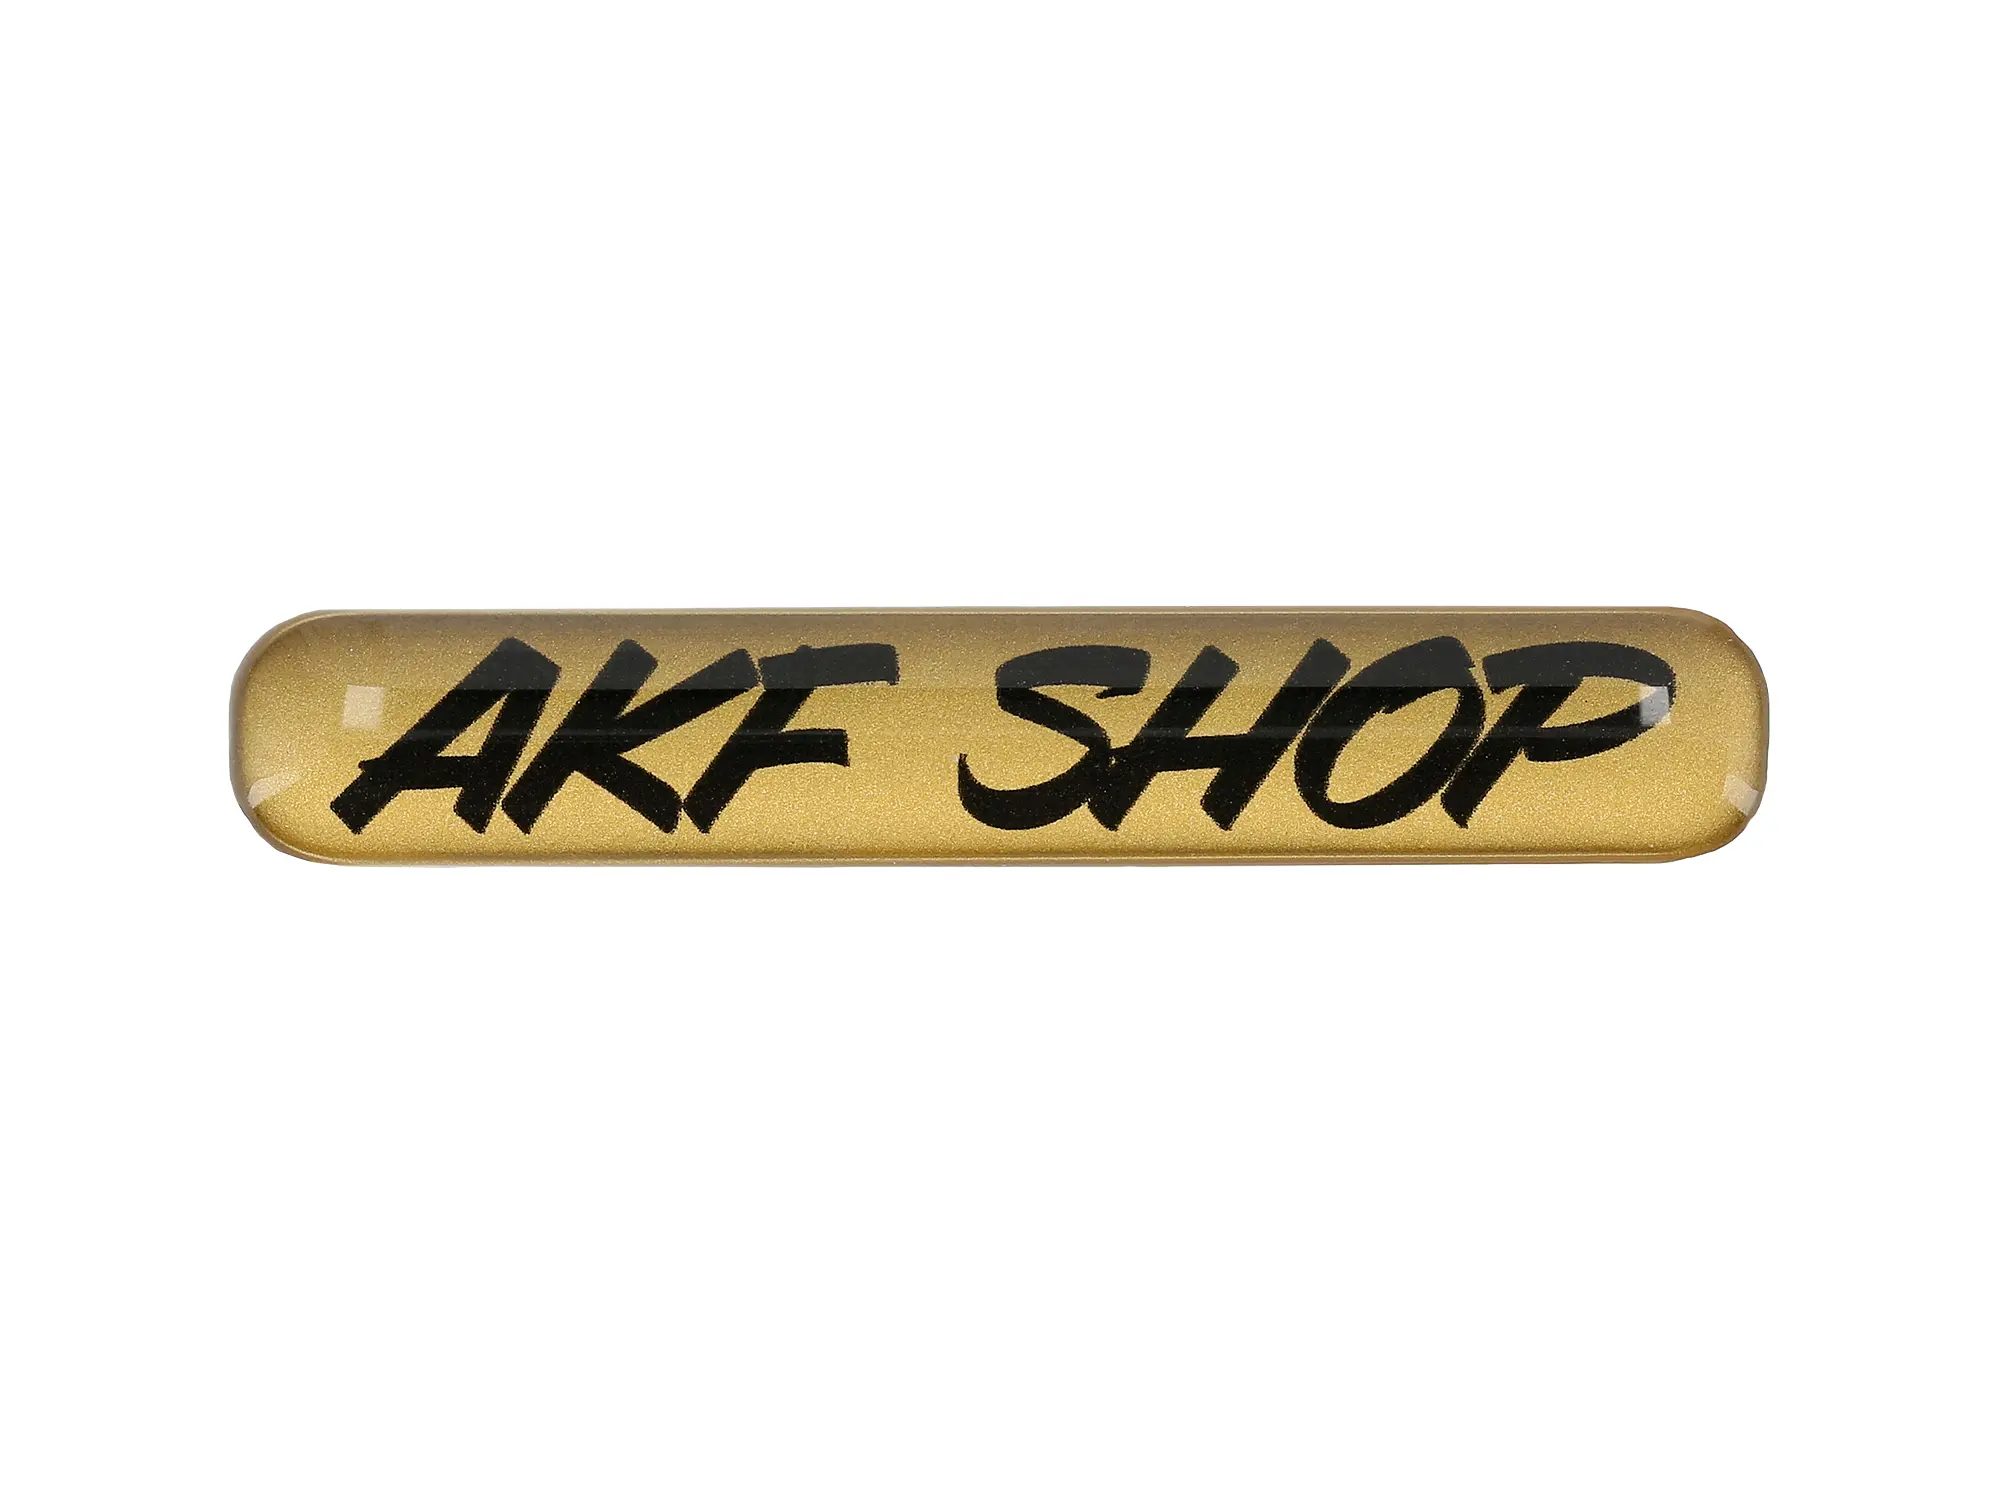 Gelaufkleber - "AKF Shop" gold/schwarz, Art.-Nr.: 10070616 - Bild 1